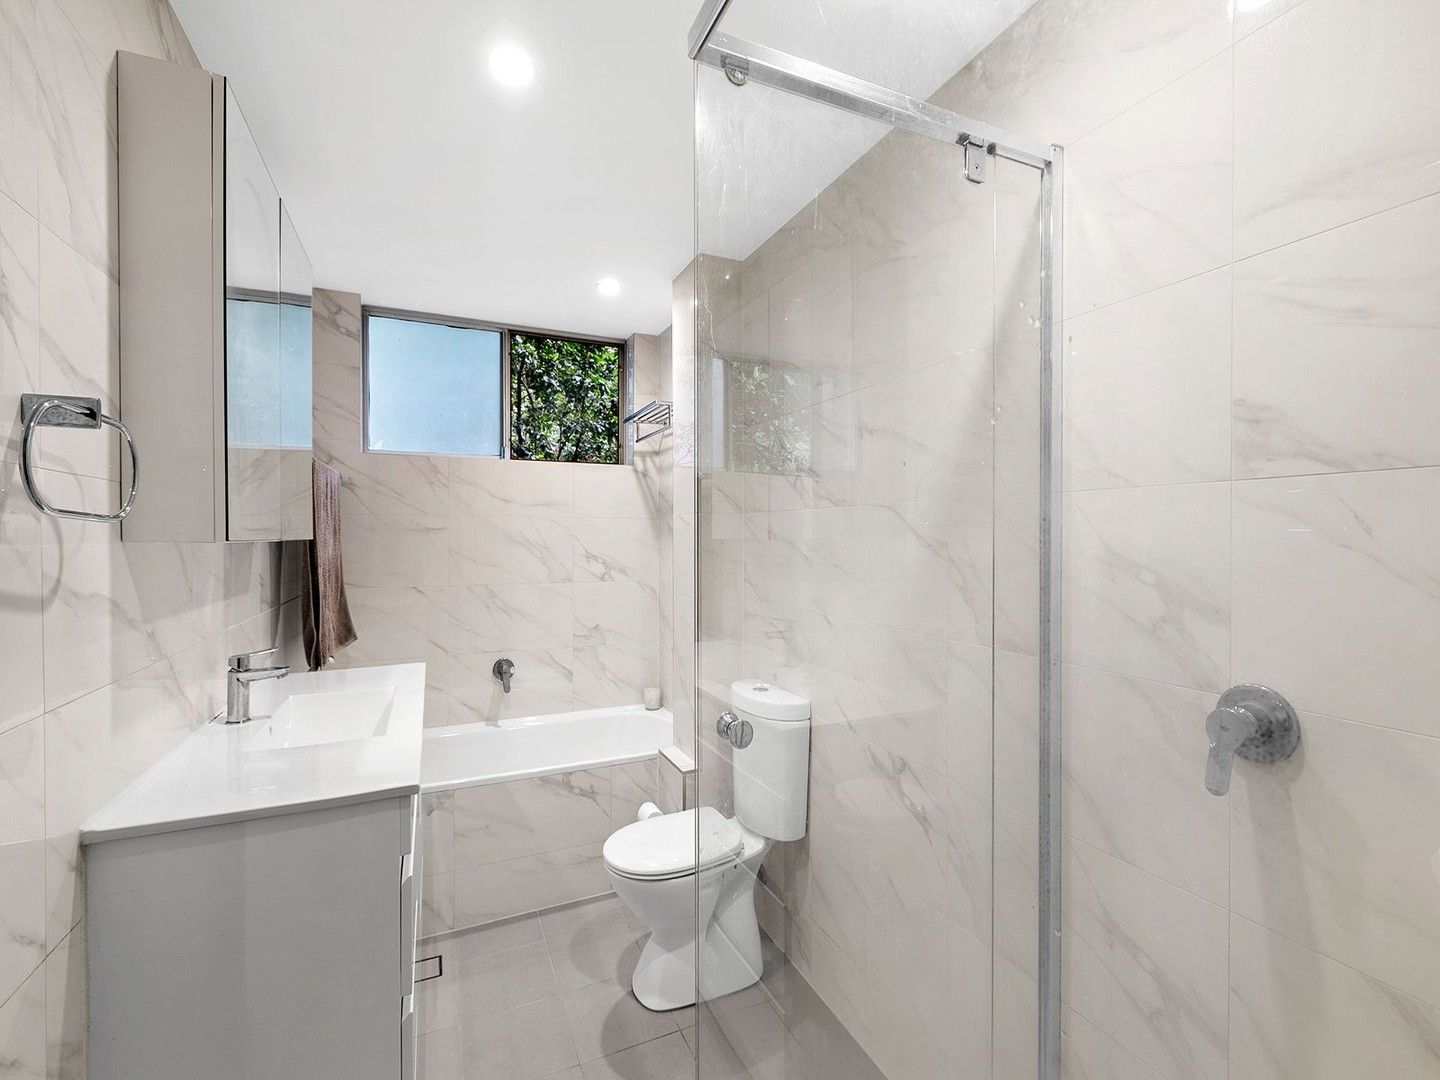 2 bedrooms Apartment / Unit / Flat in 10/29 Belmont Avenue WOLLSTONECRAFT NSW, 2065